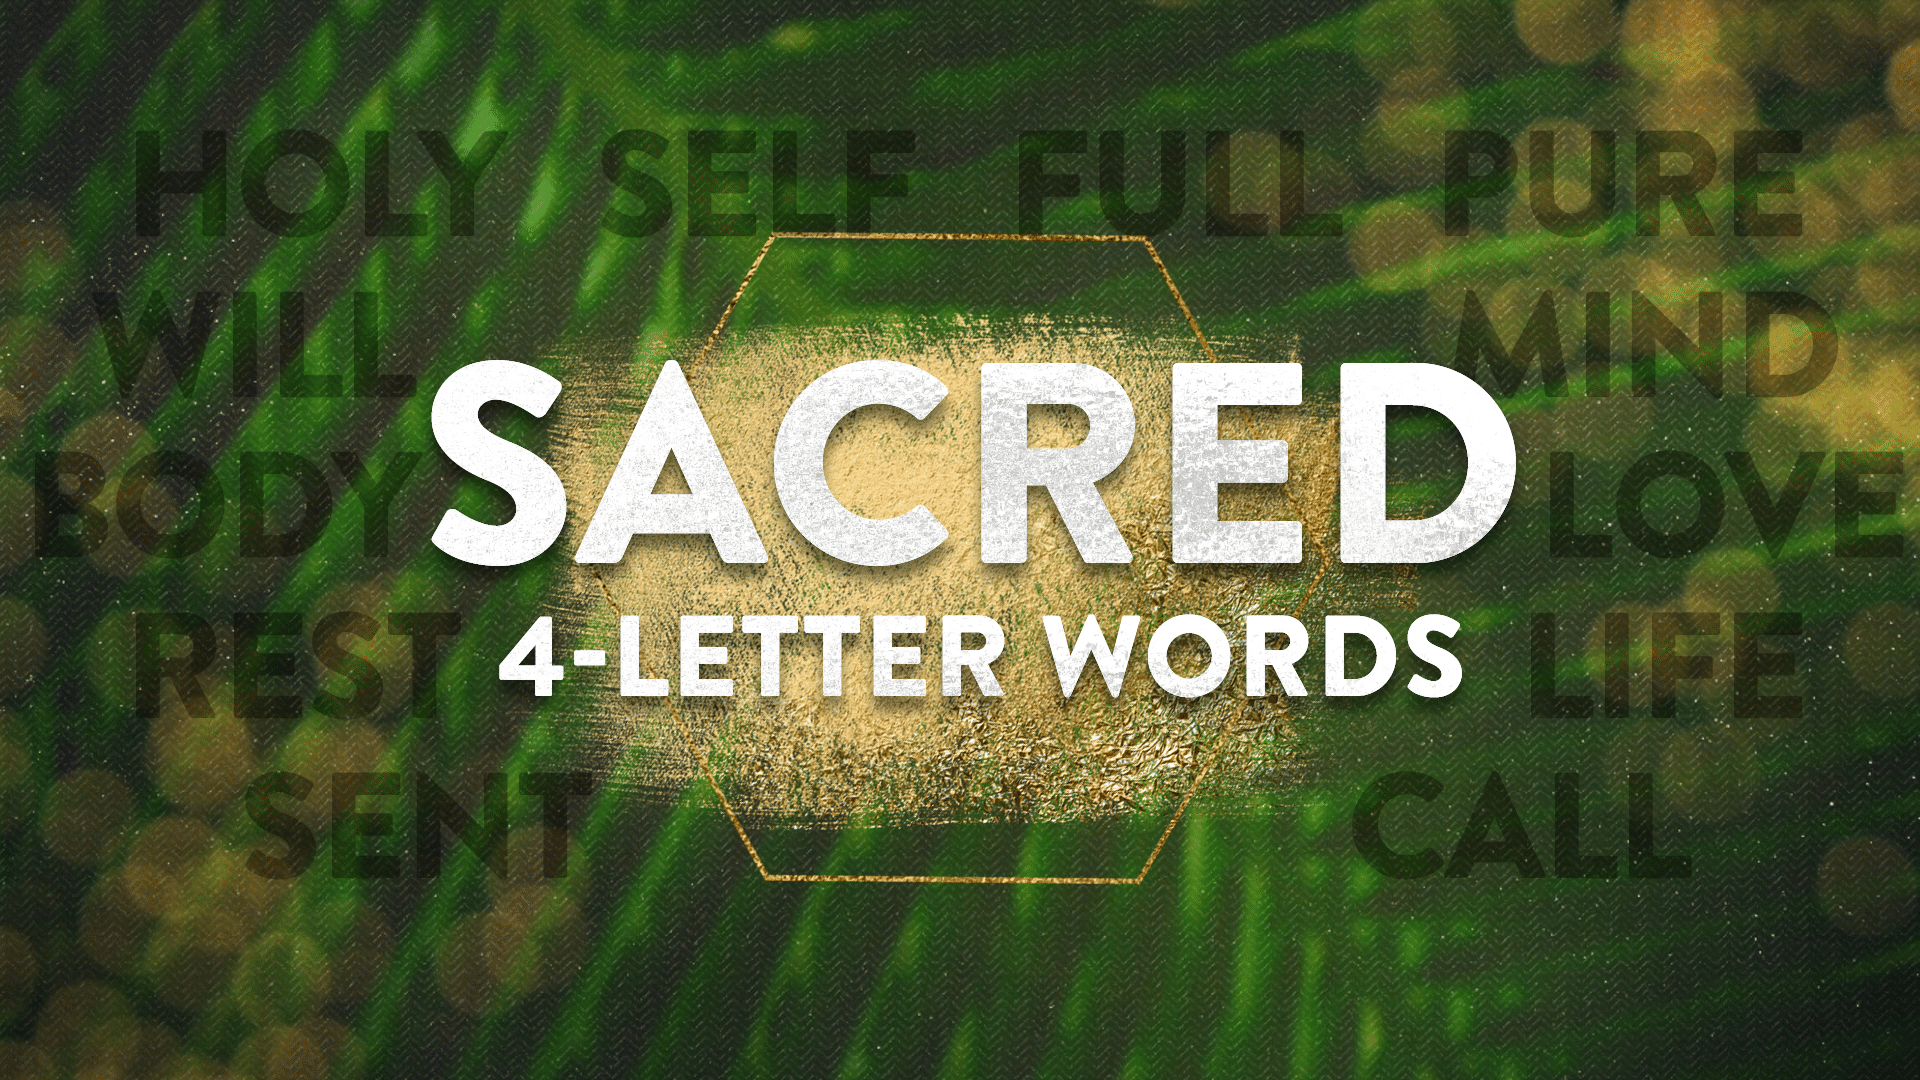 Sacred 4-Letter Words: Holy